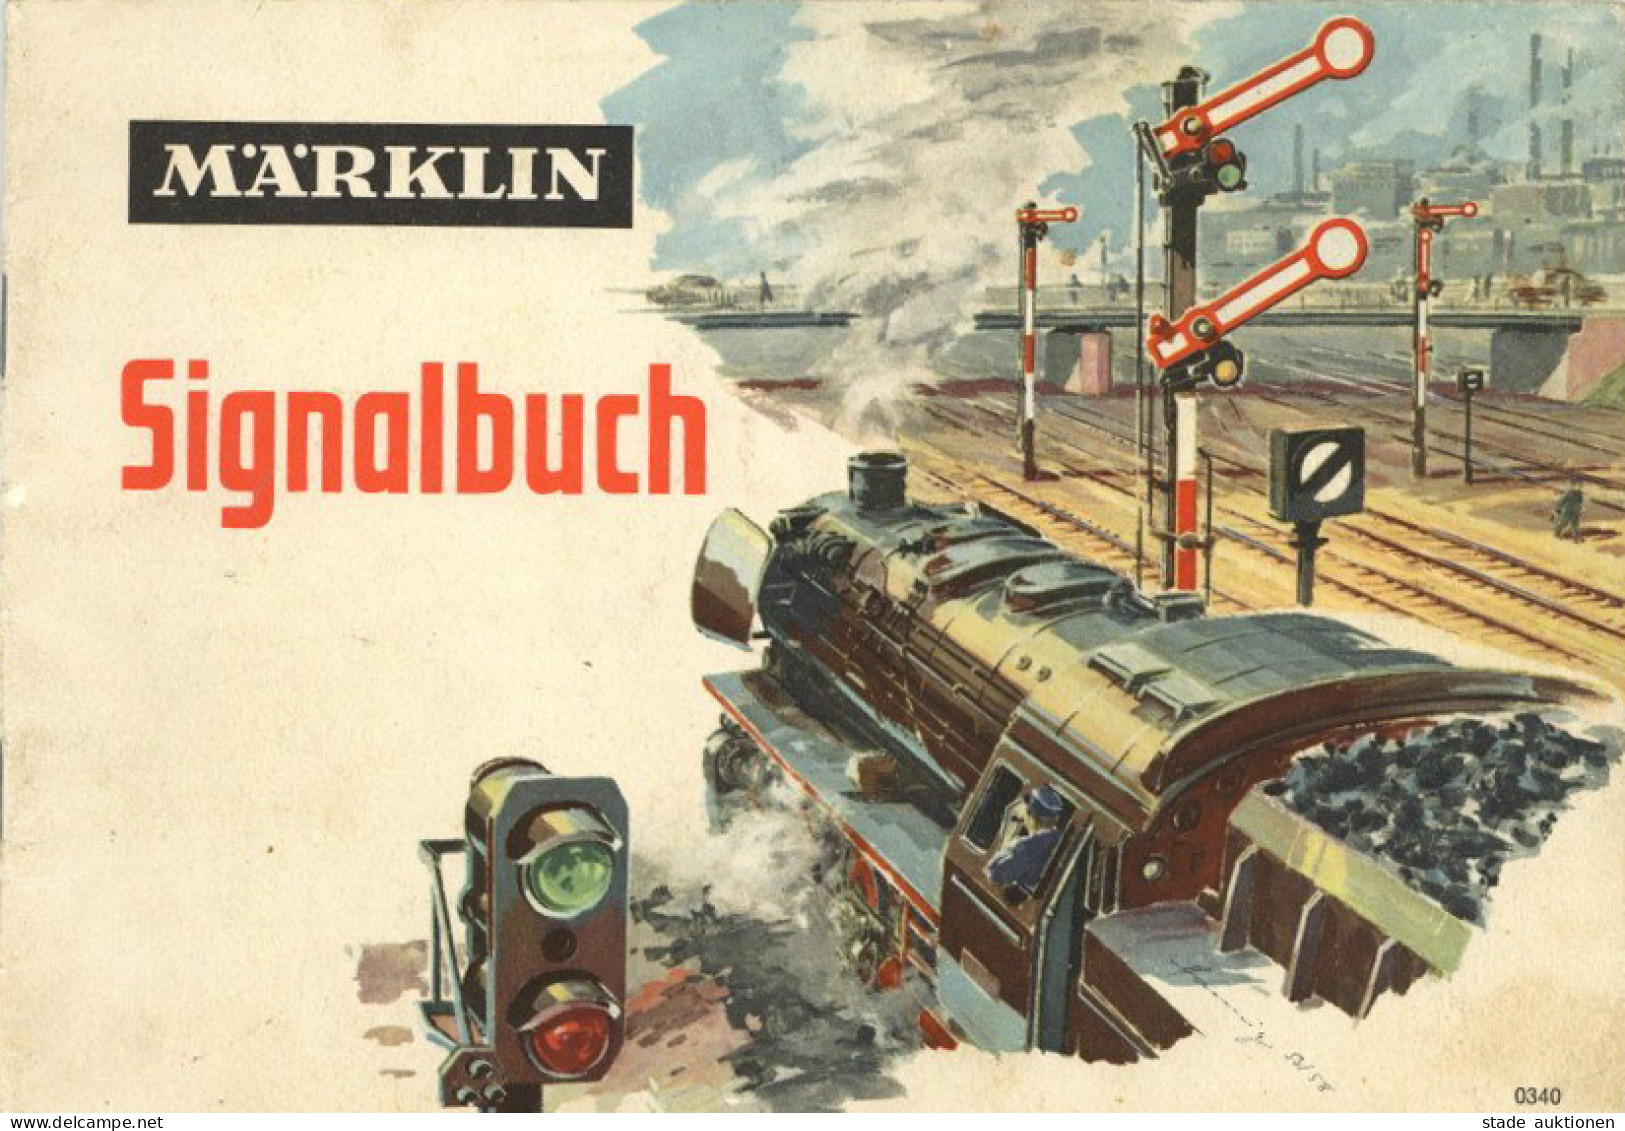 Eisenbahn Märklin Signalbuch 0340, 40 S. I-II Chemin De Fer - Trenes